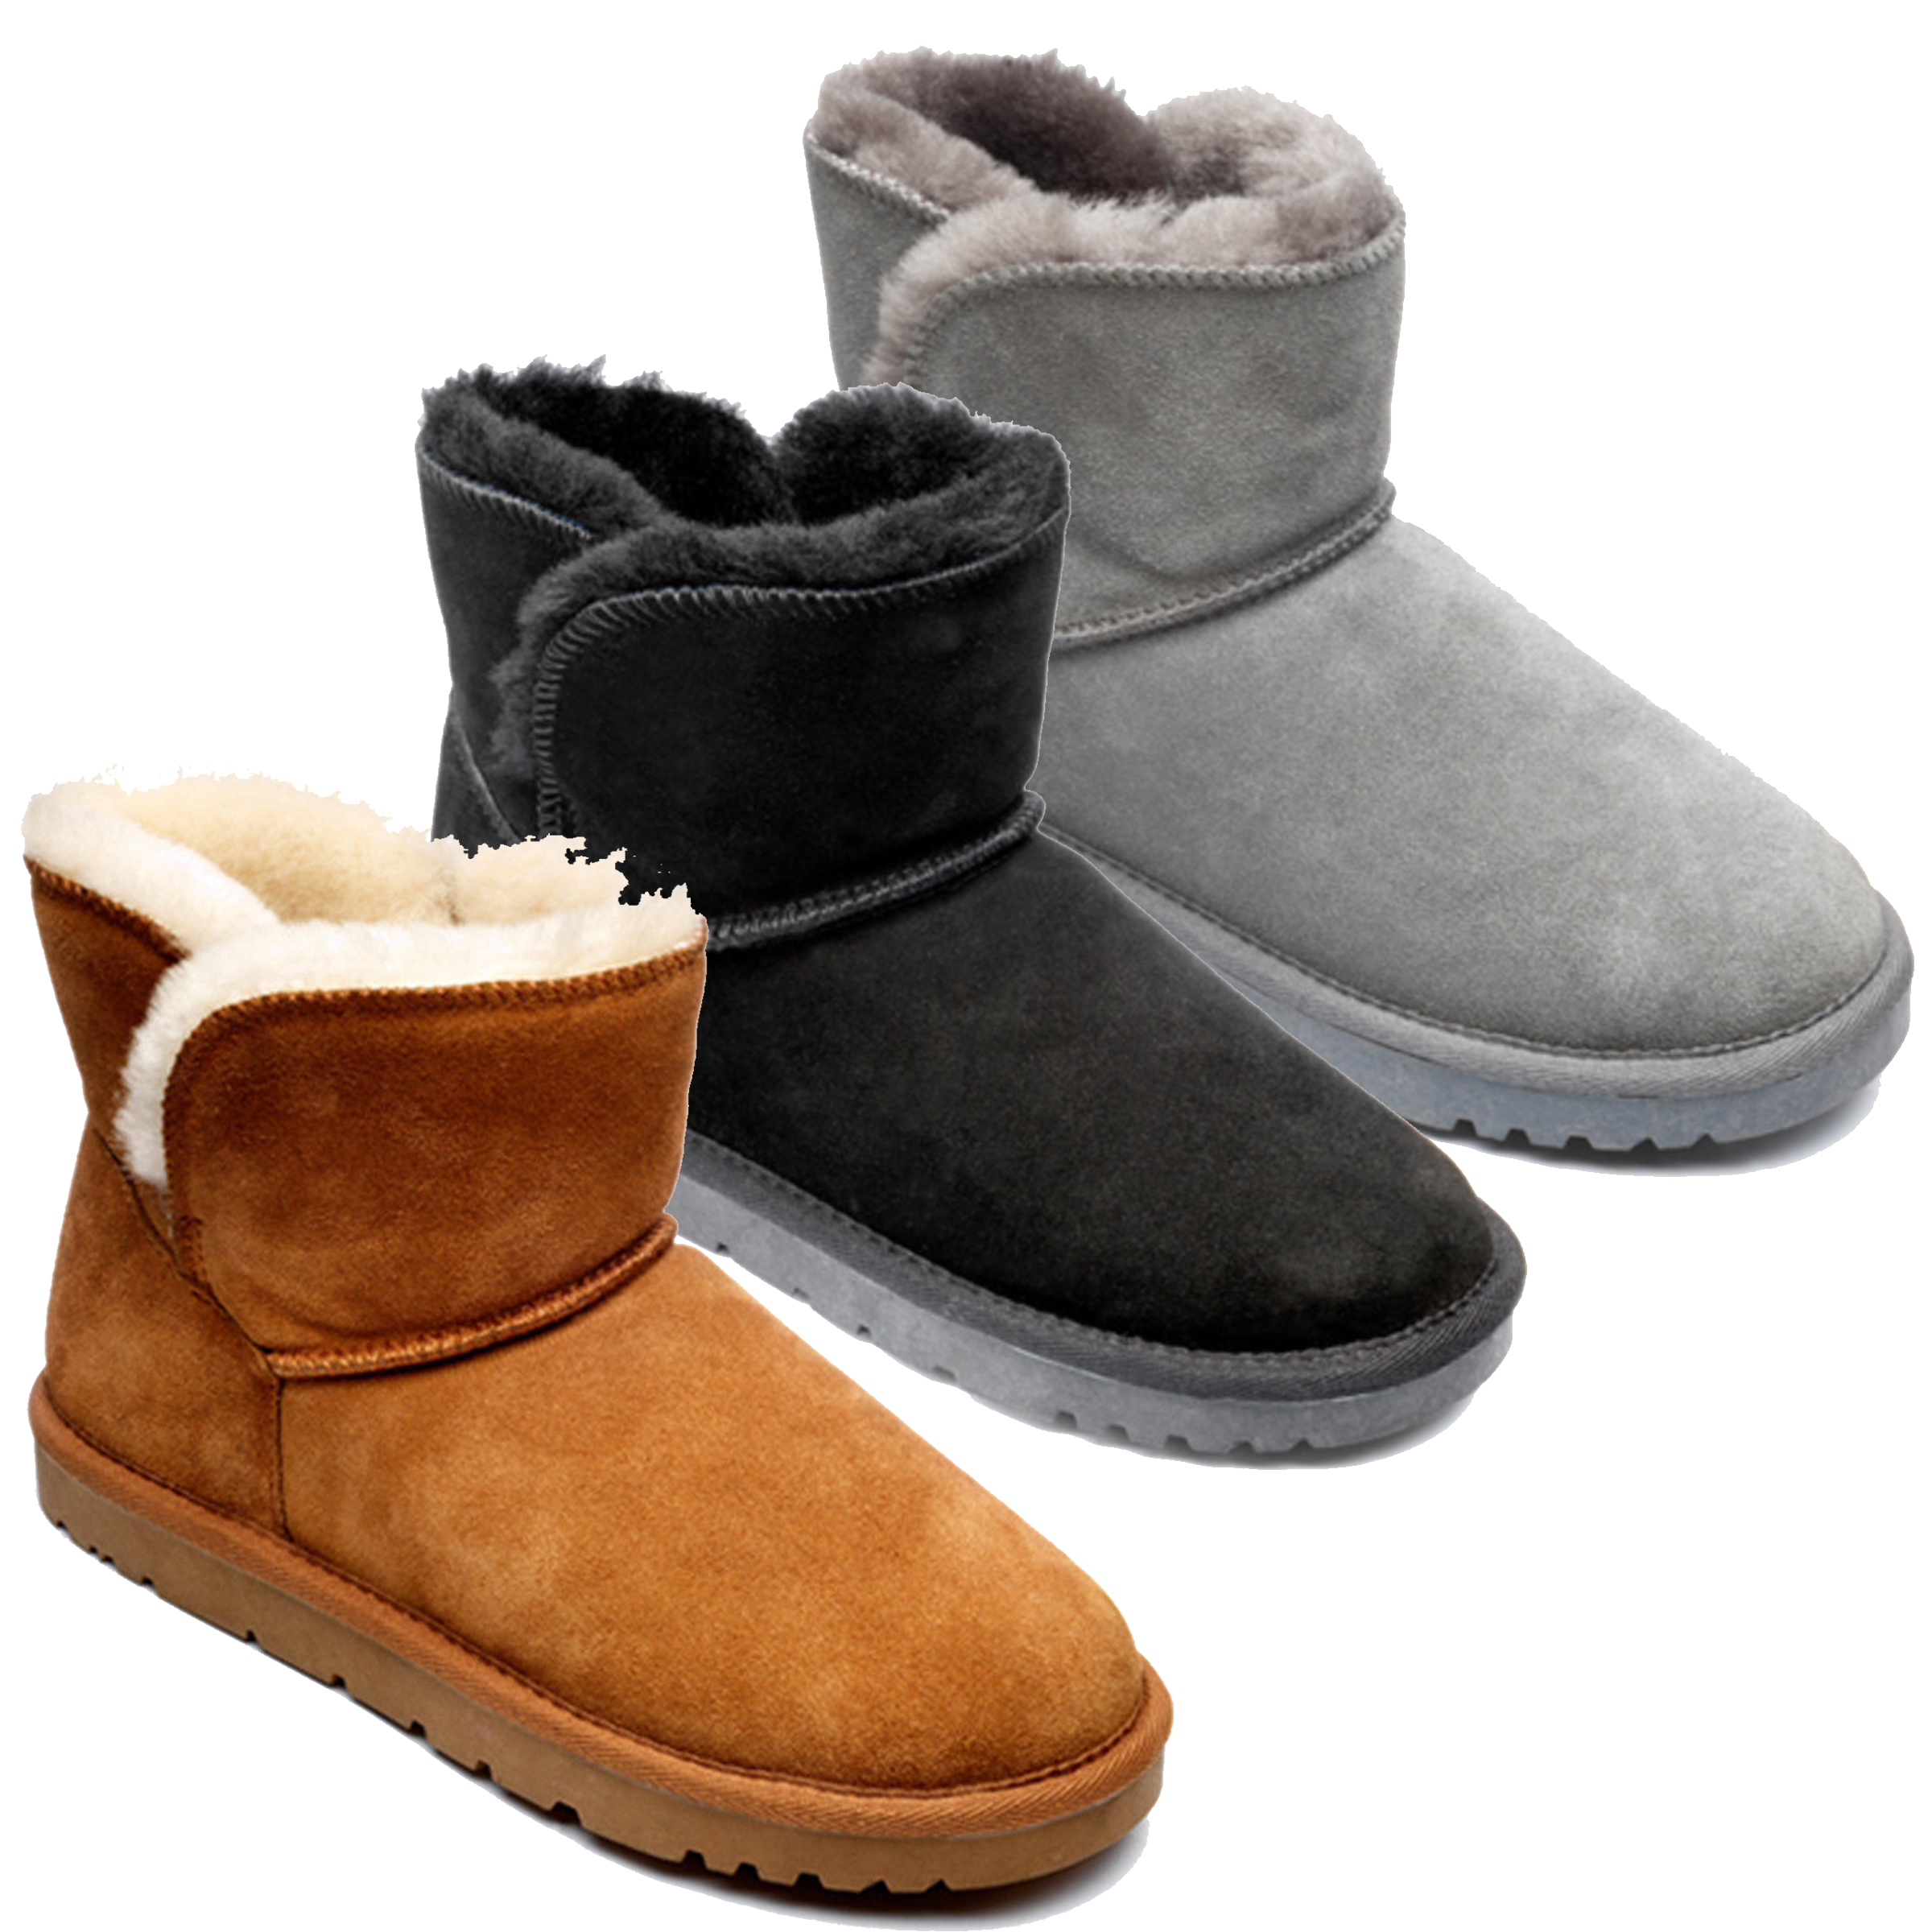 freestep sheepskin boots off 60% - www 